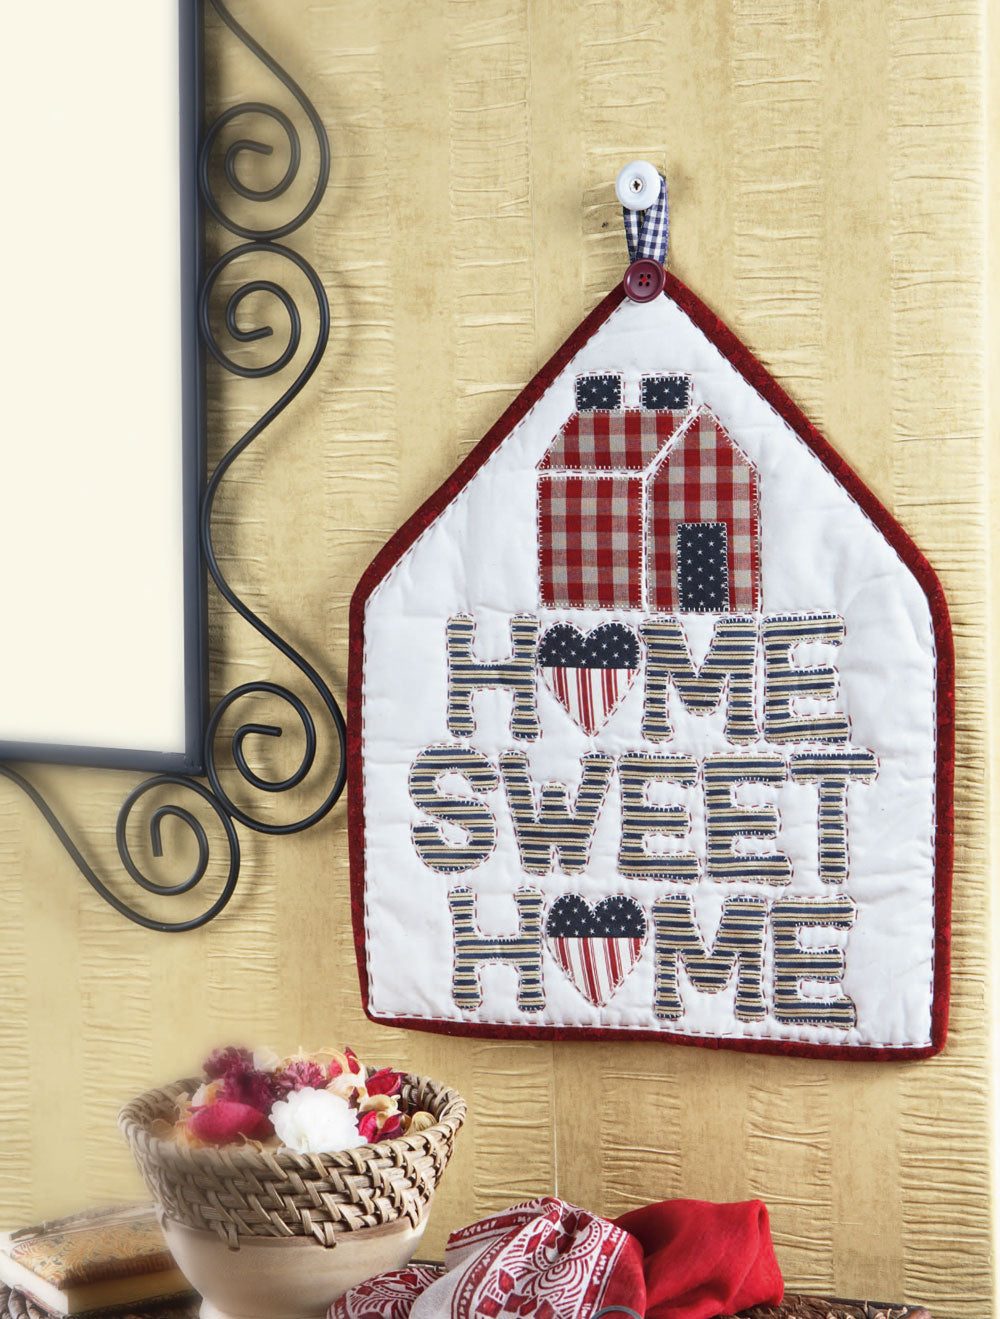 Tag home sweet home - schema cucito creativo